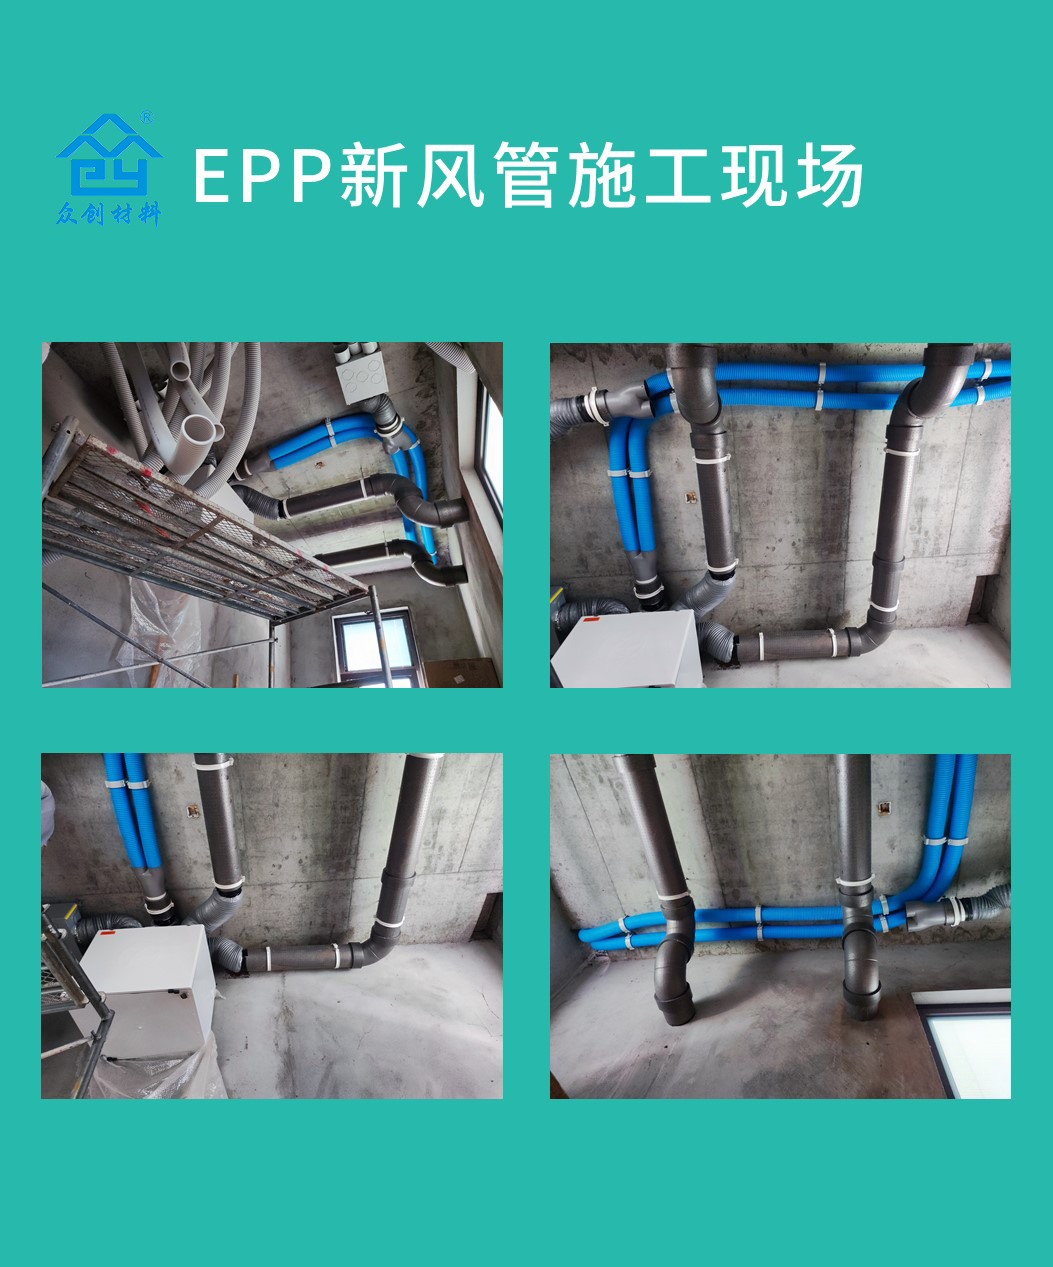 EPP新風管施工現場(Chǎng)